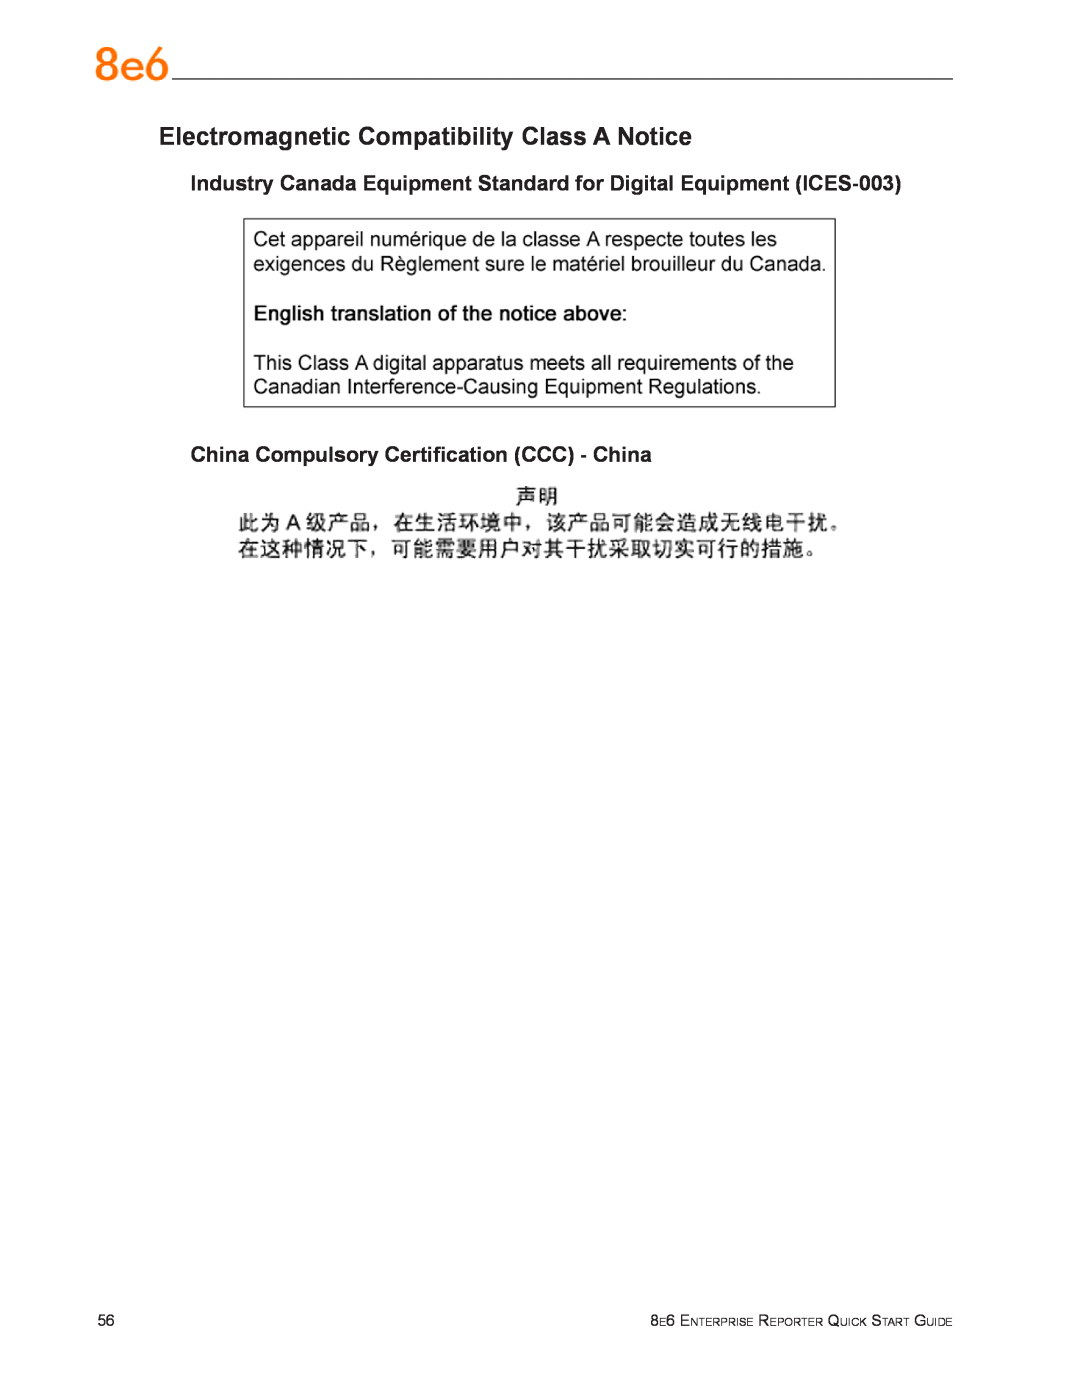 8e6 Technologies ER3-100 (5K02-55) Electromagnetic Compatibility Class A Notice, 8e6 Enterprise Reporter Quick Start Guide 